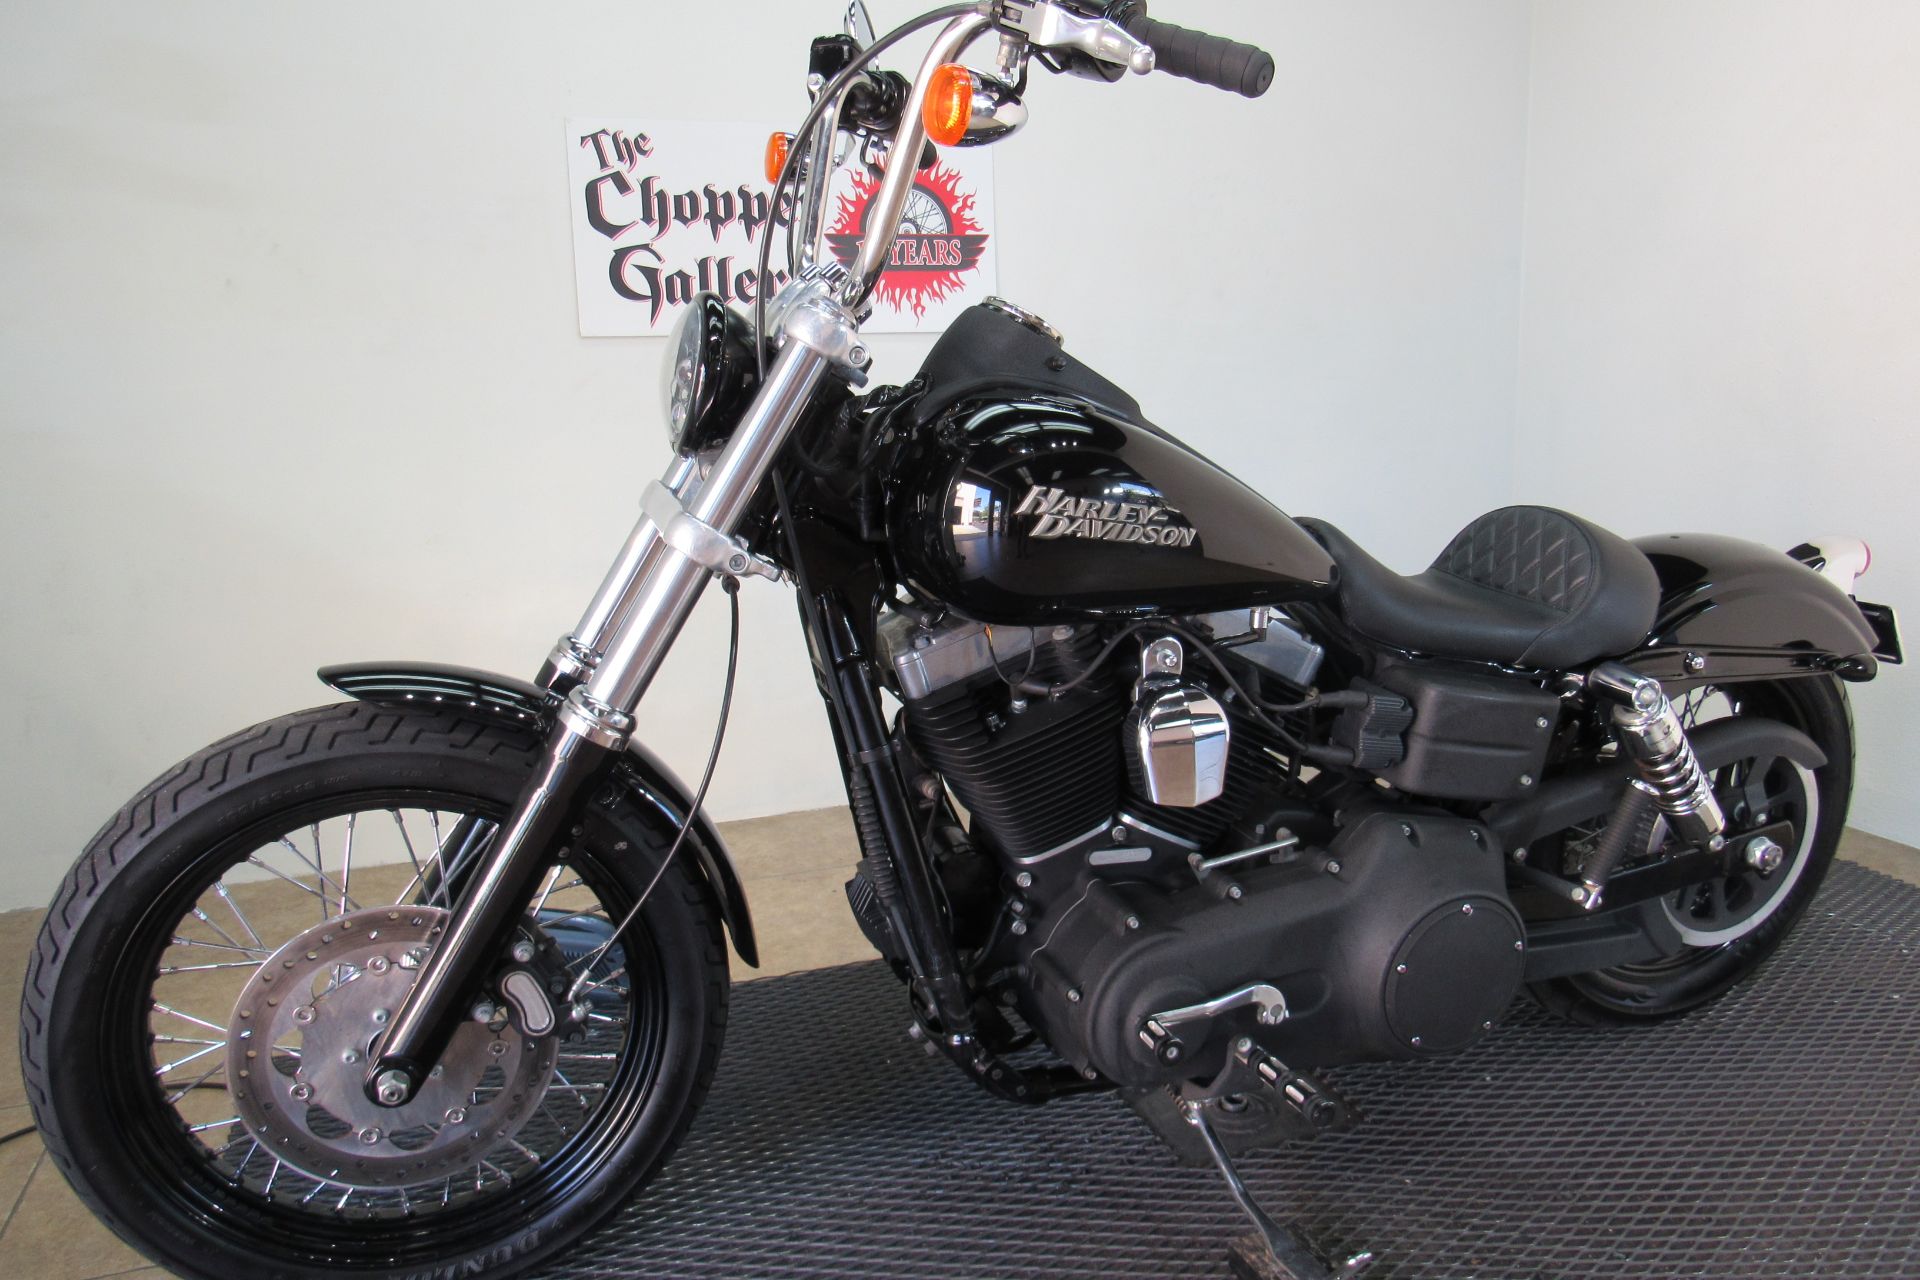 2011 Harley-Davidson Dyna® Street Bob® in Temecula, California - Photo 4